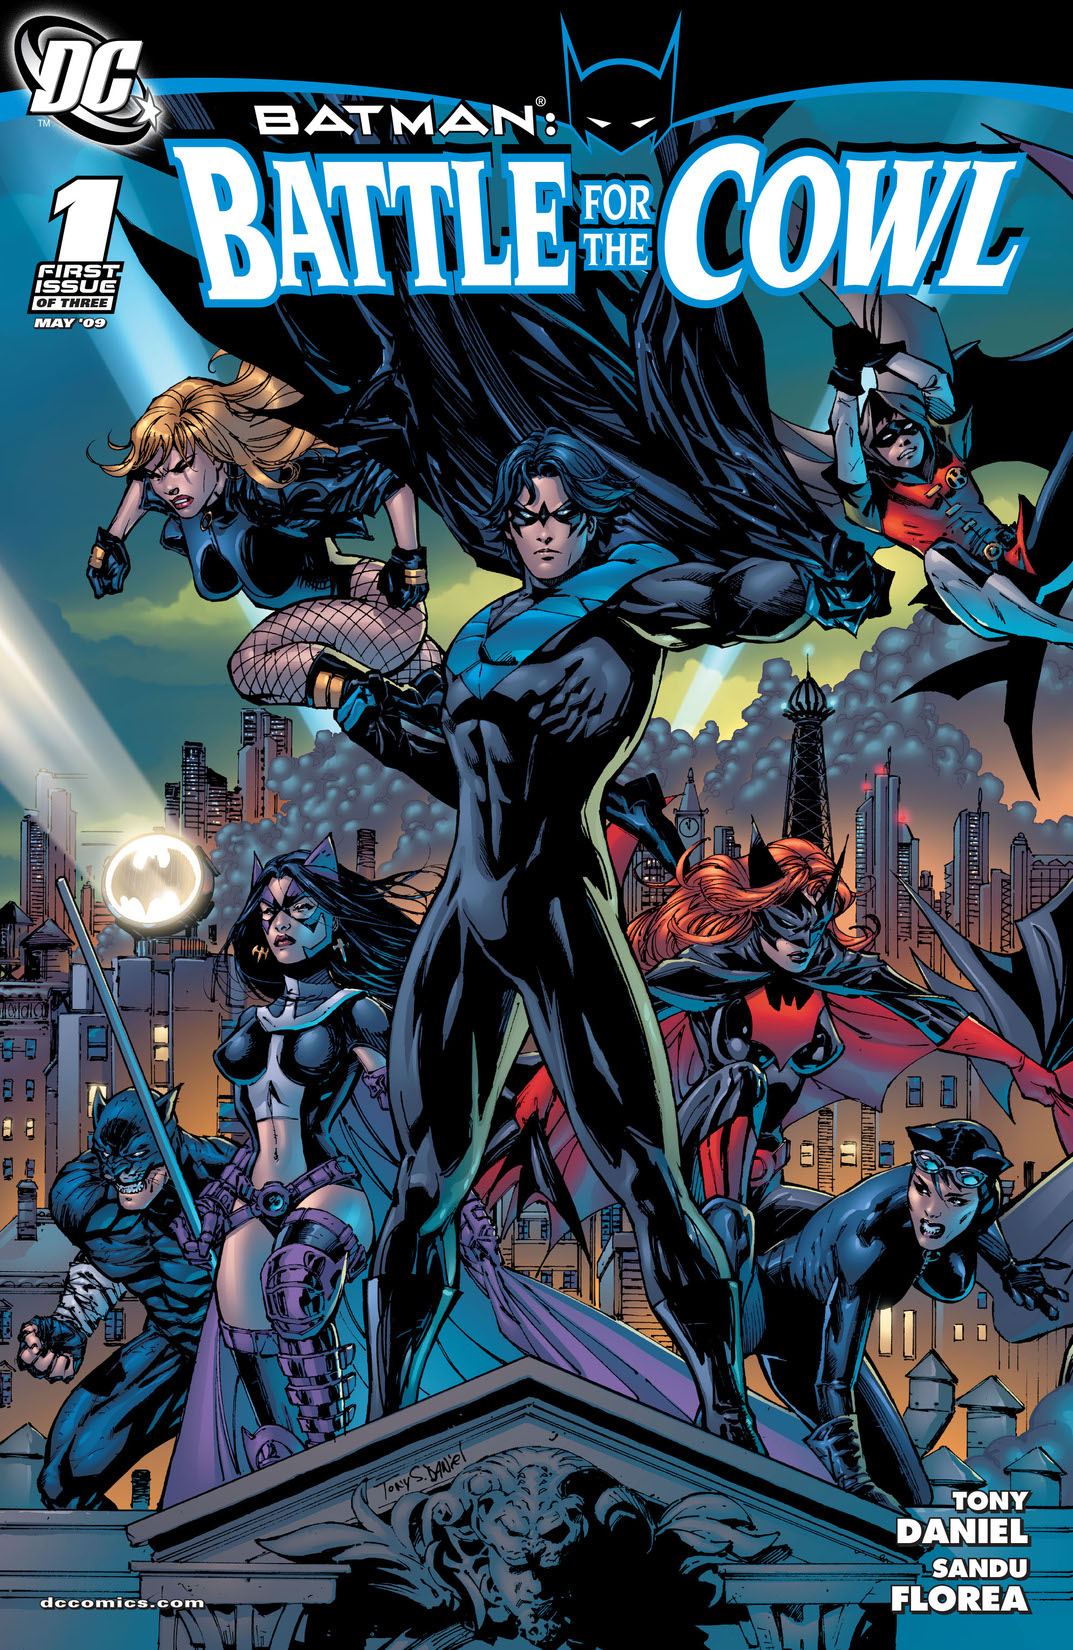 Batman: Battle for the Cowl #1 preview images